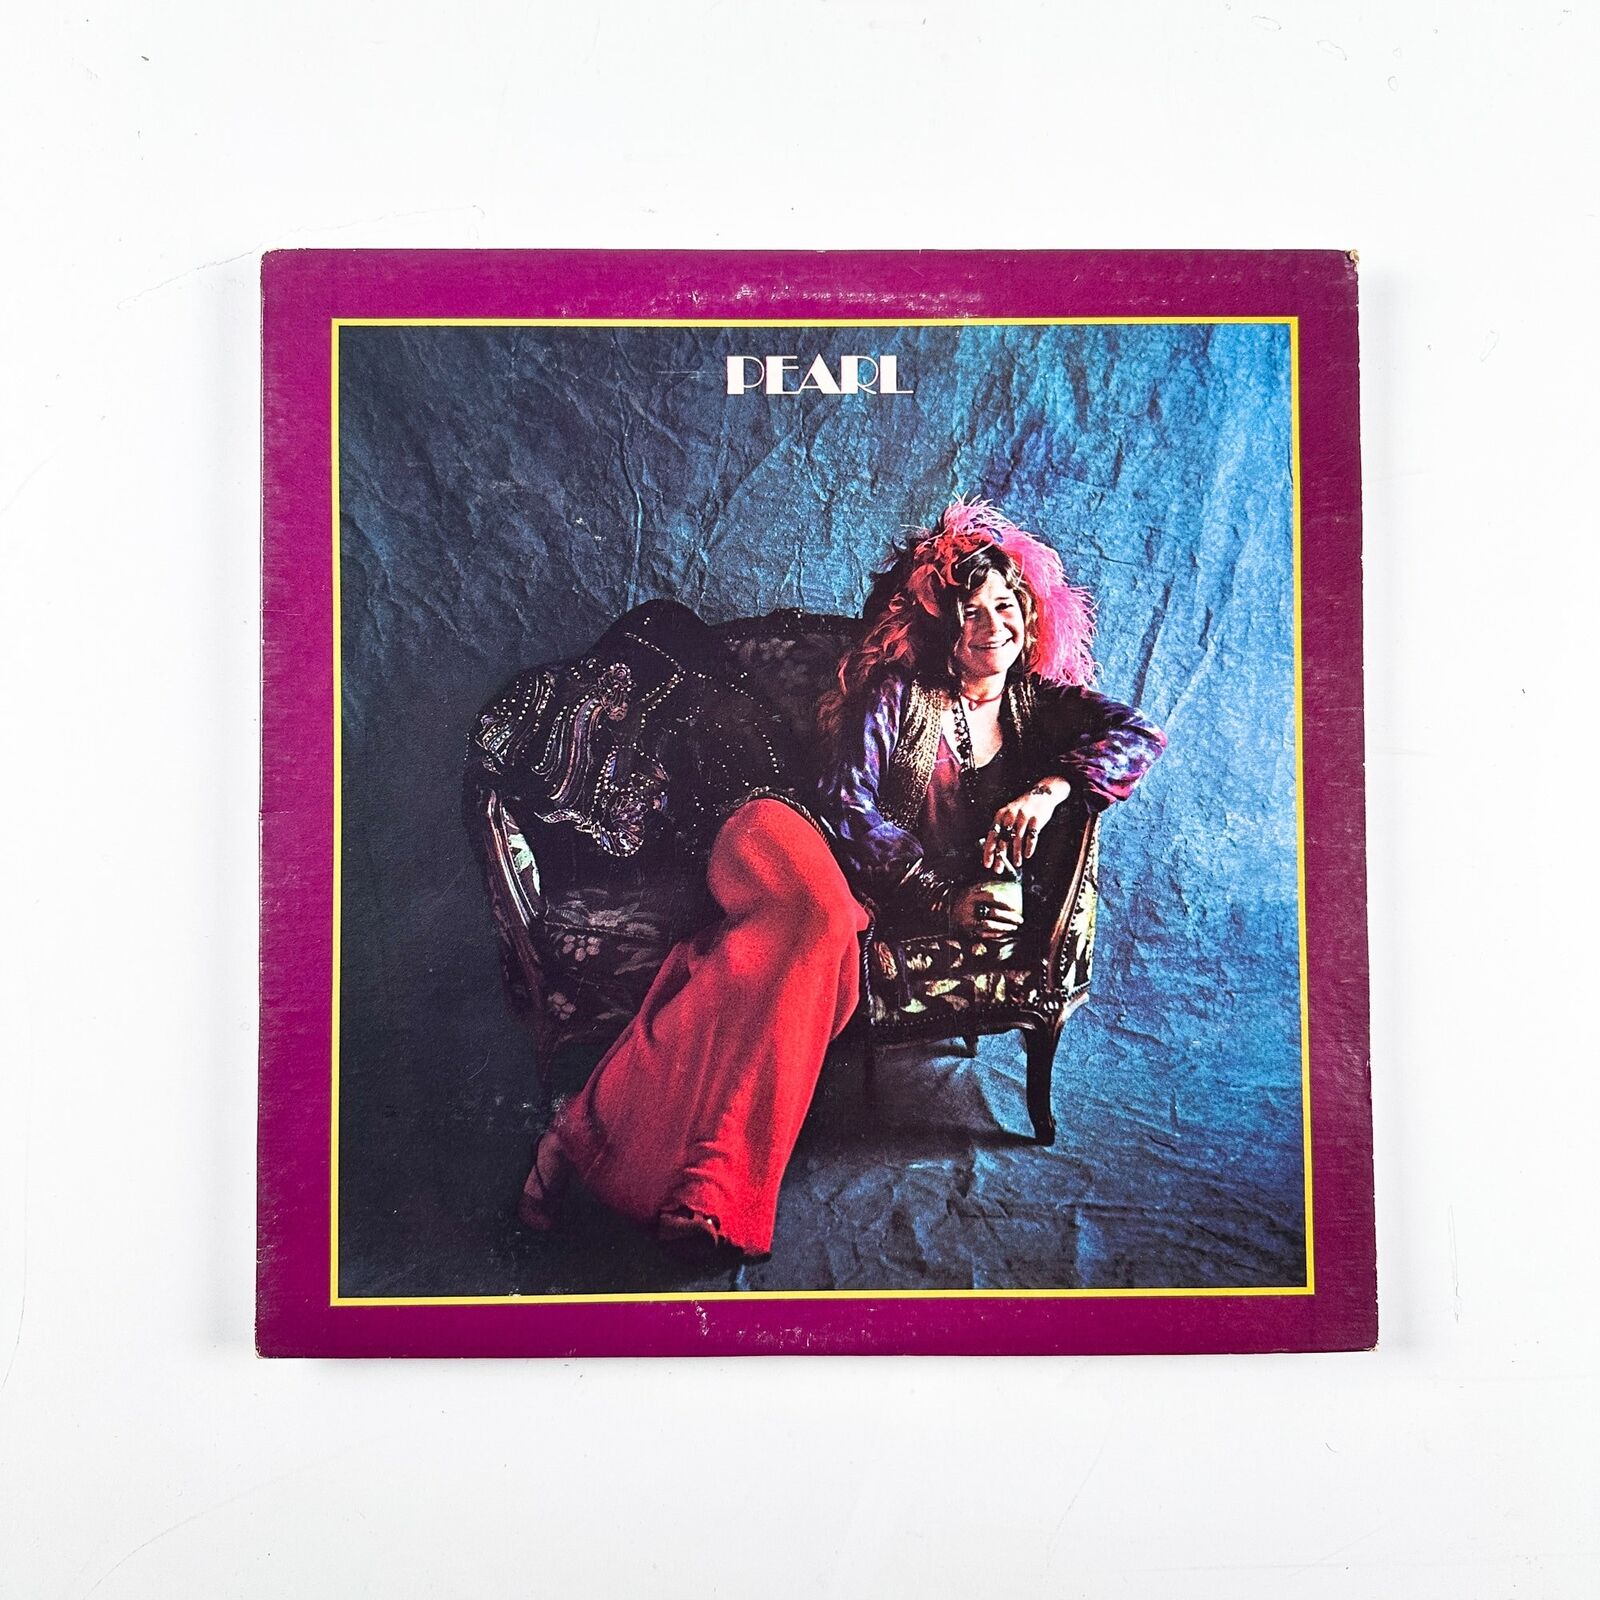 Janis Joplin - Pearl - Vinyl LP Record - 1983